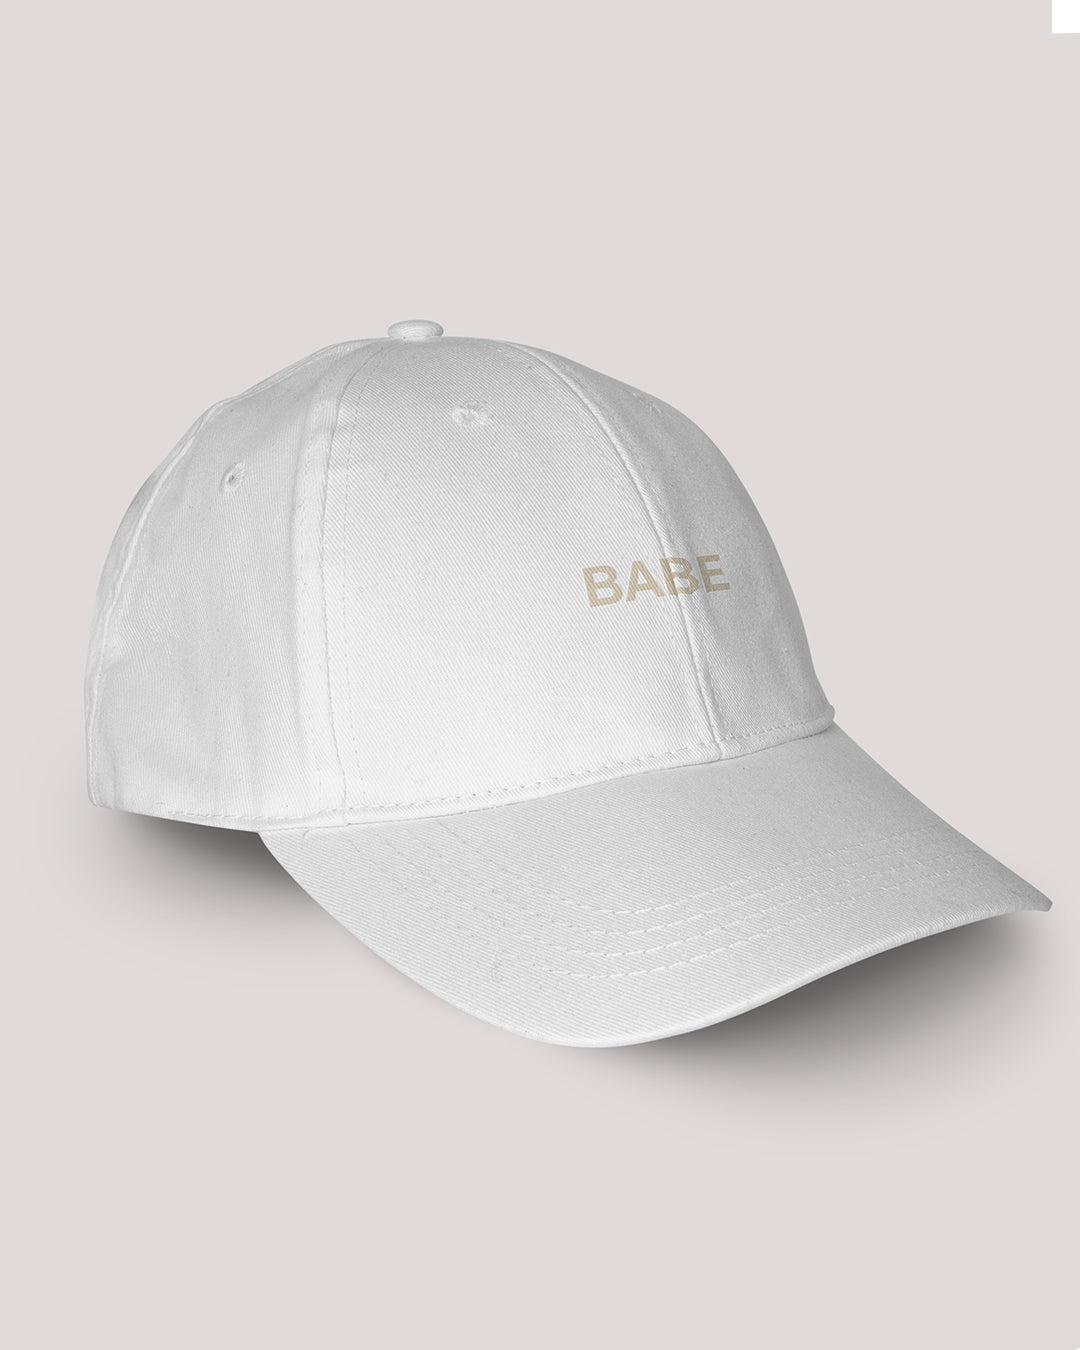 'BABE' Cap